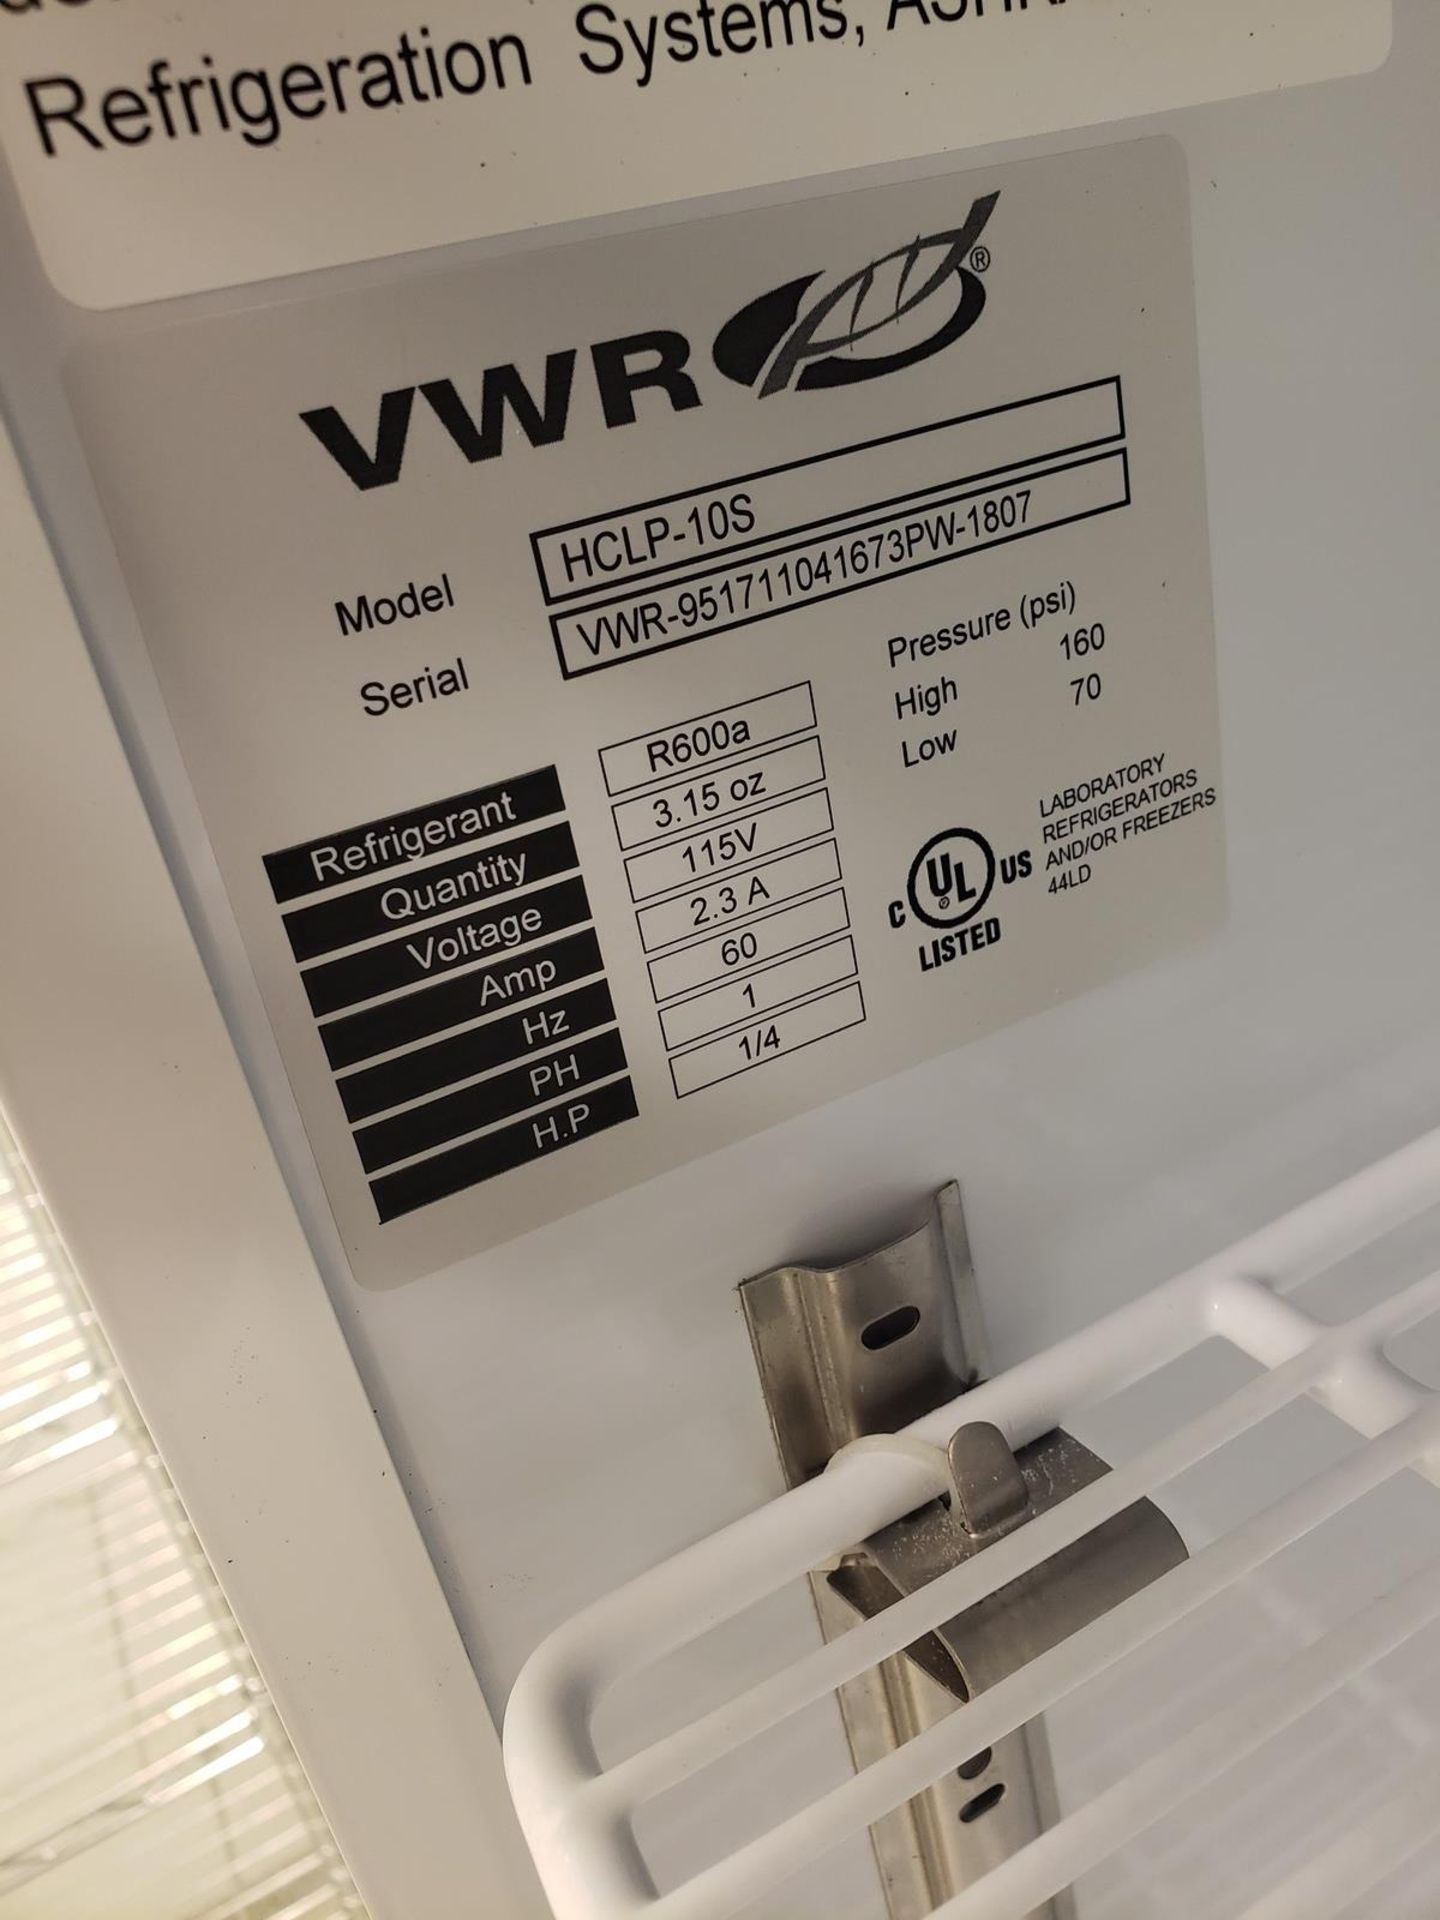 VWR Refrigerator, M# HCLP-10S, S/N VWR-951711041673PW-1807 - Image 2 of 3